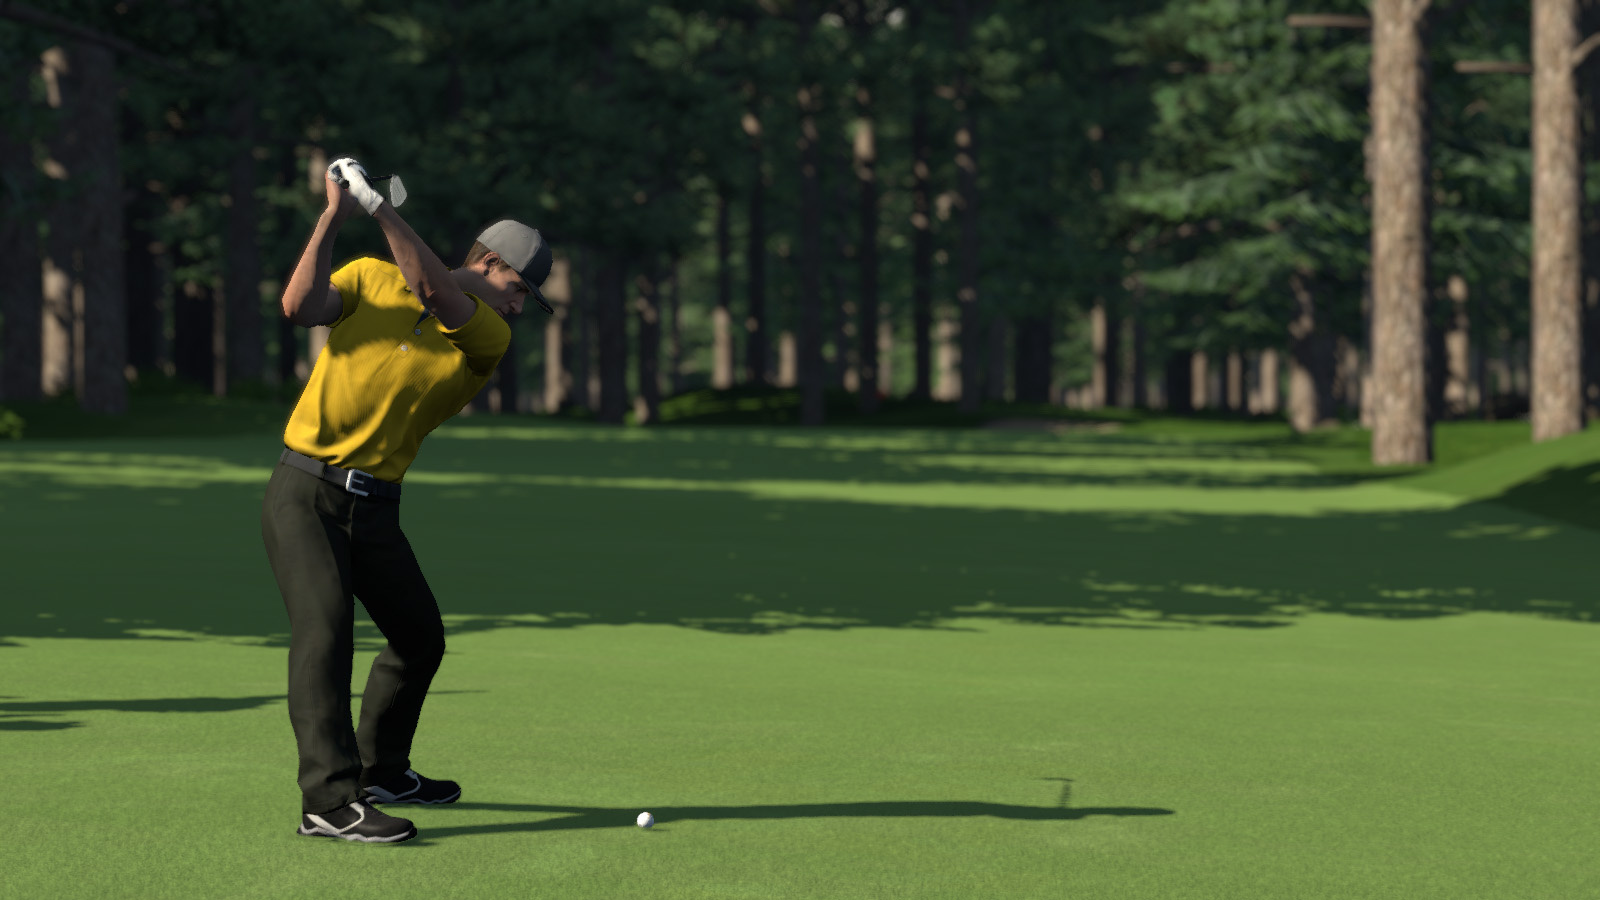 The Golf Club (PS4 / PlayStation 4) News, Reviews, Trailer & Screenshots